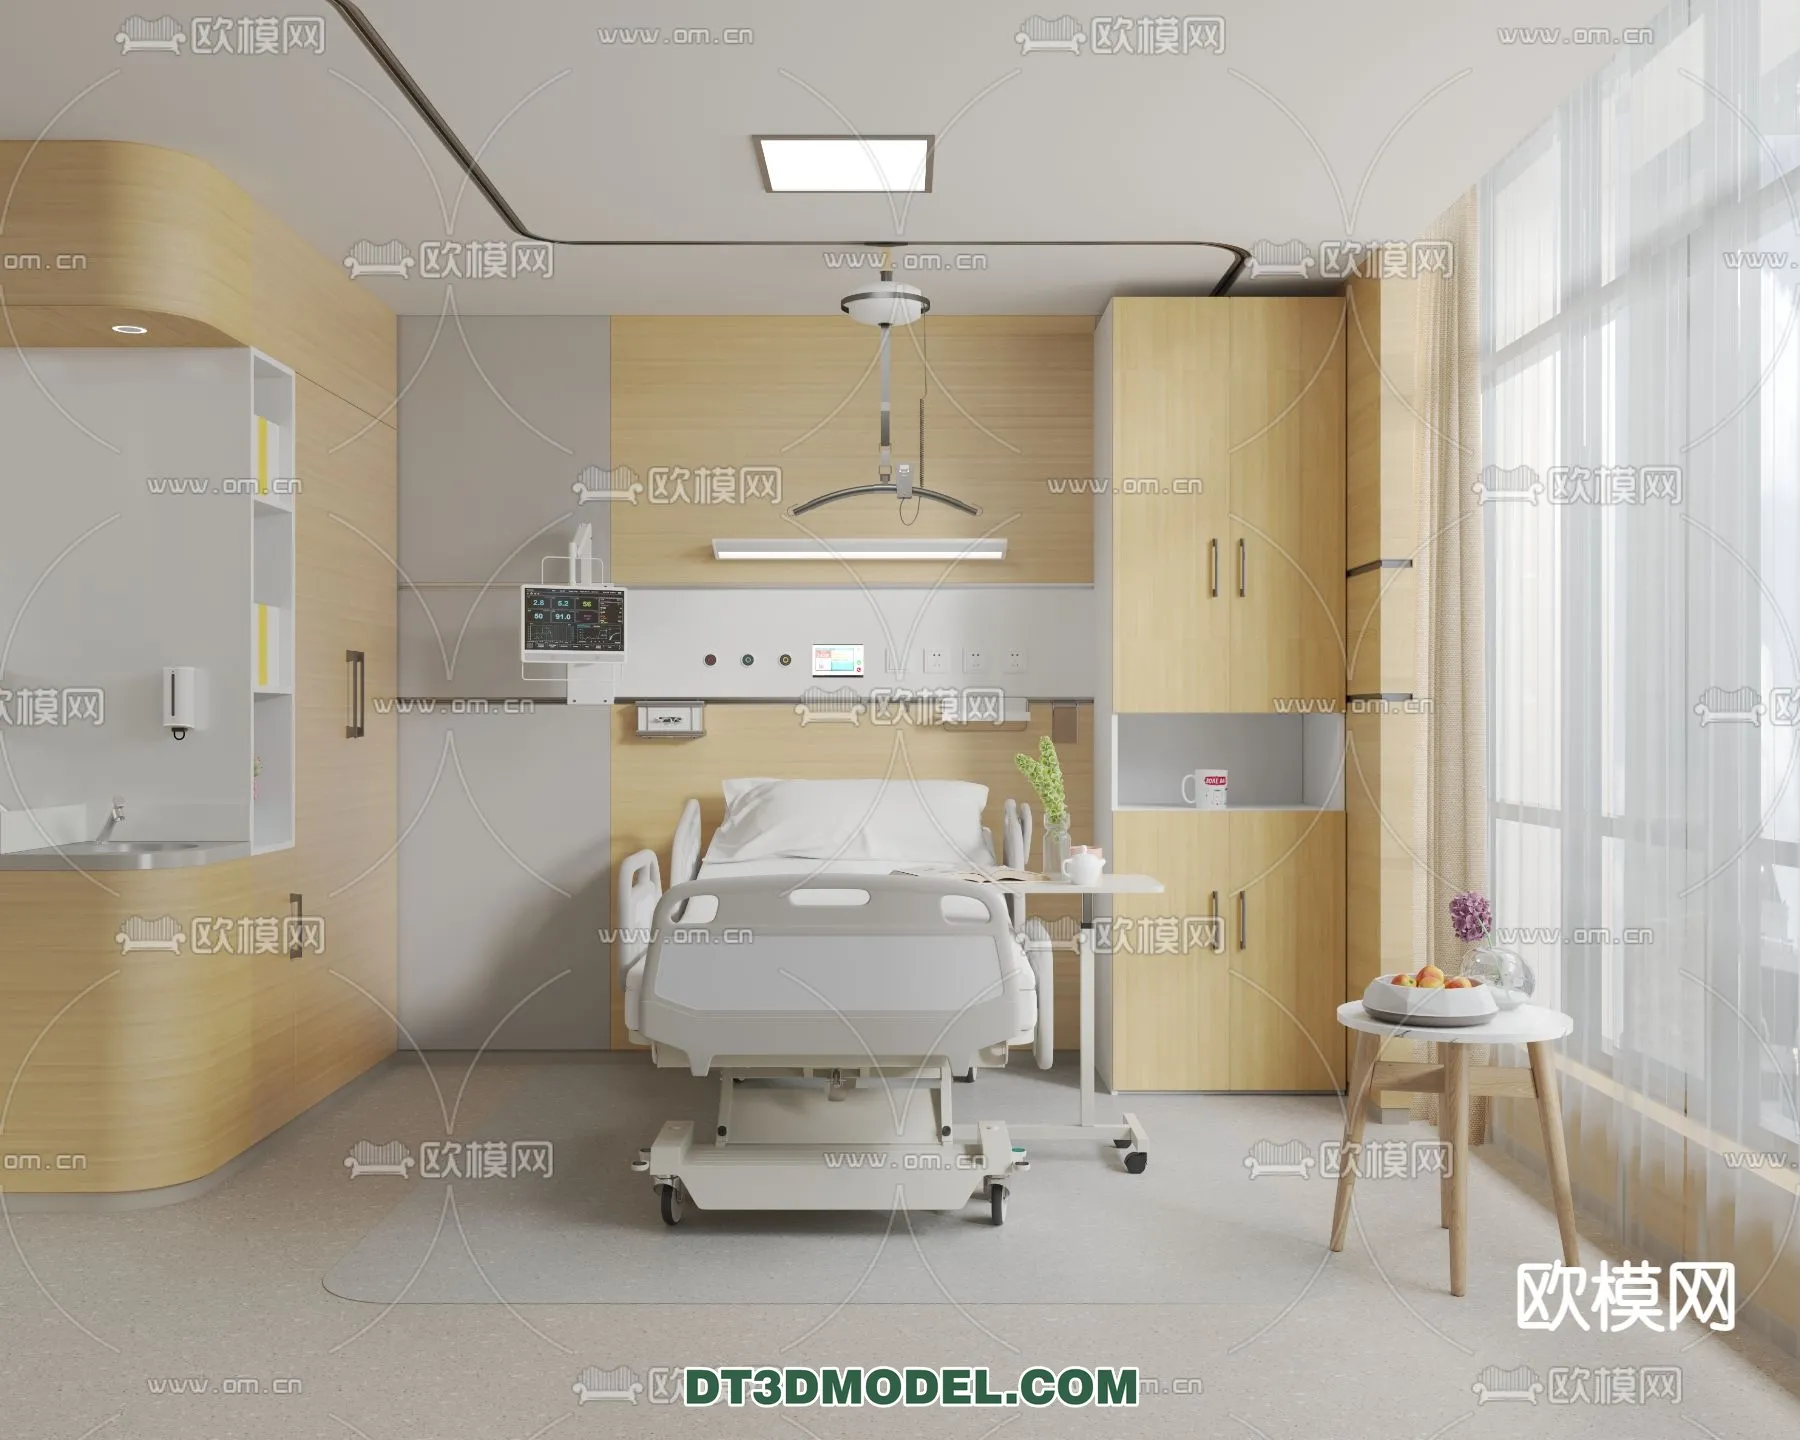 HOSPITAL 3D SCENES – MODERN – 0003